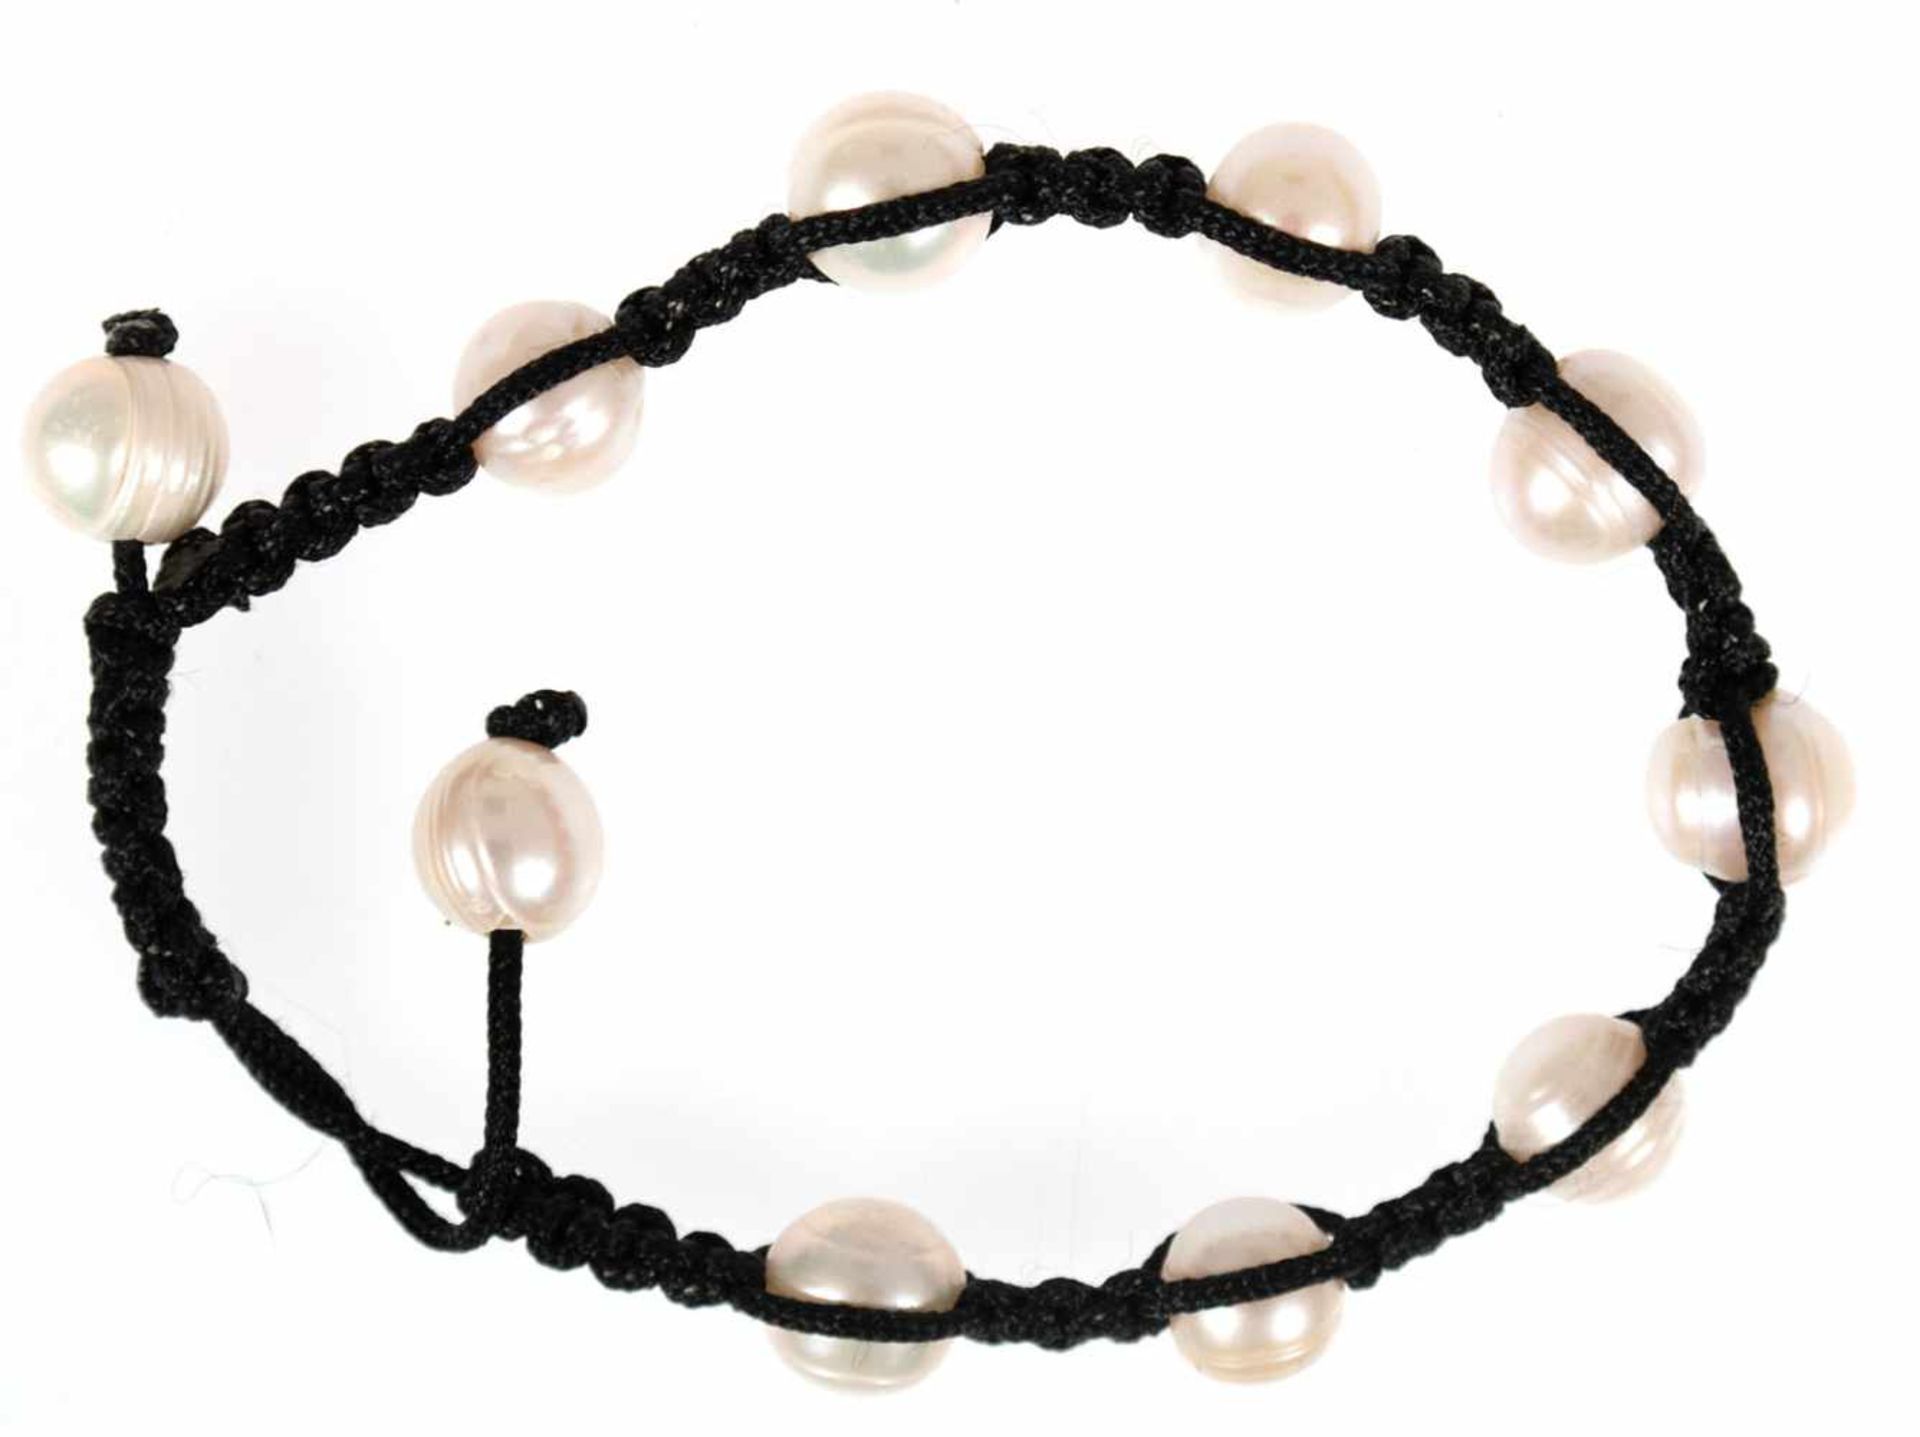 Shambala-Armband, 10 echte Perlen, in geflochtenem Textilband